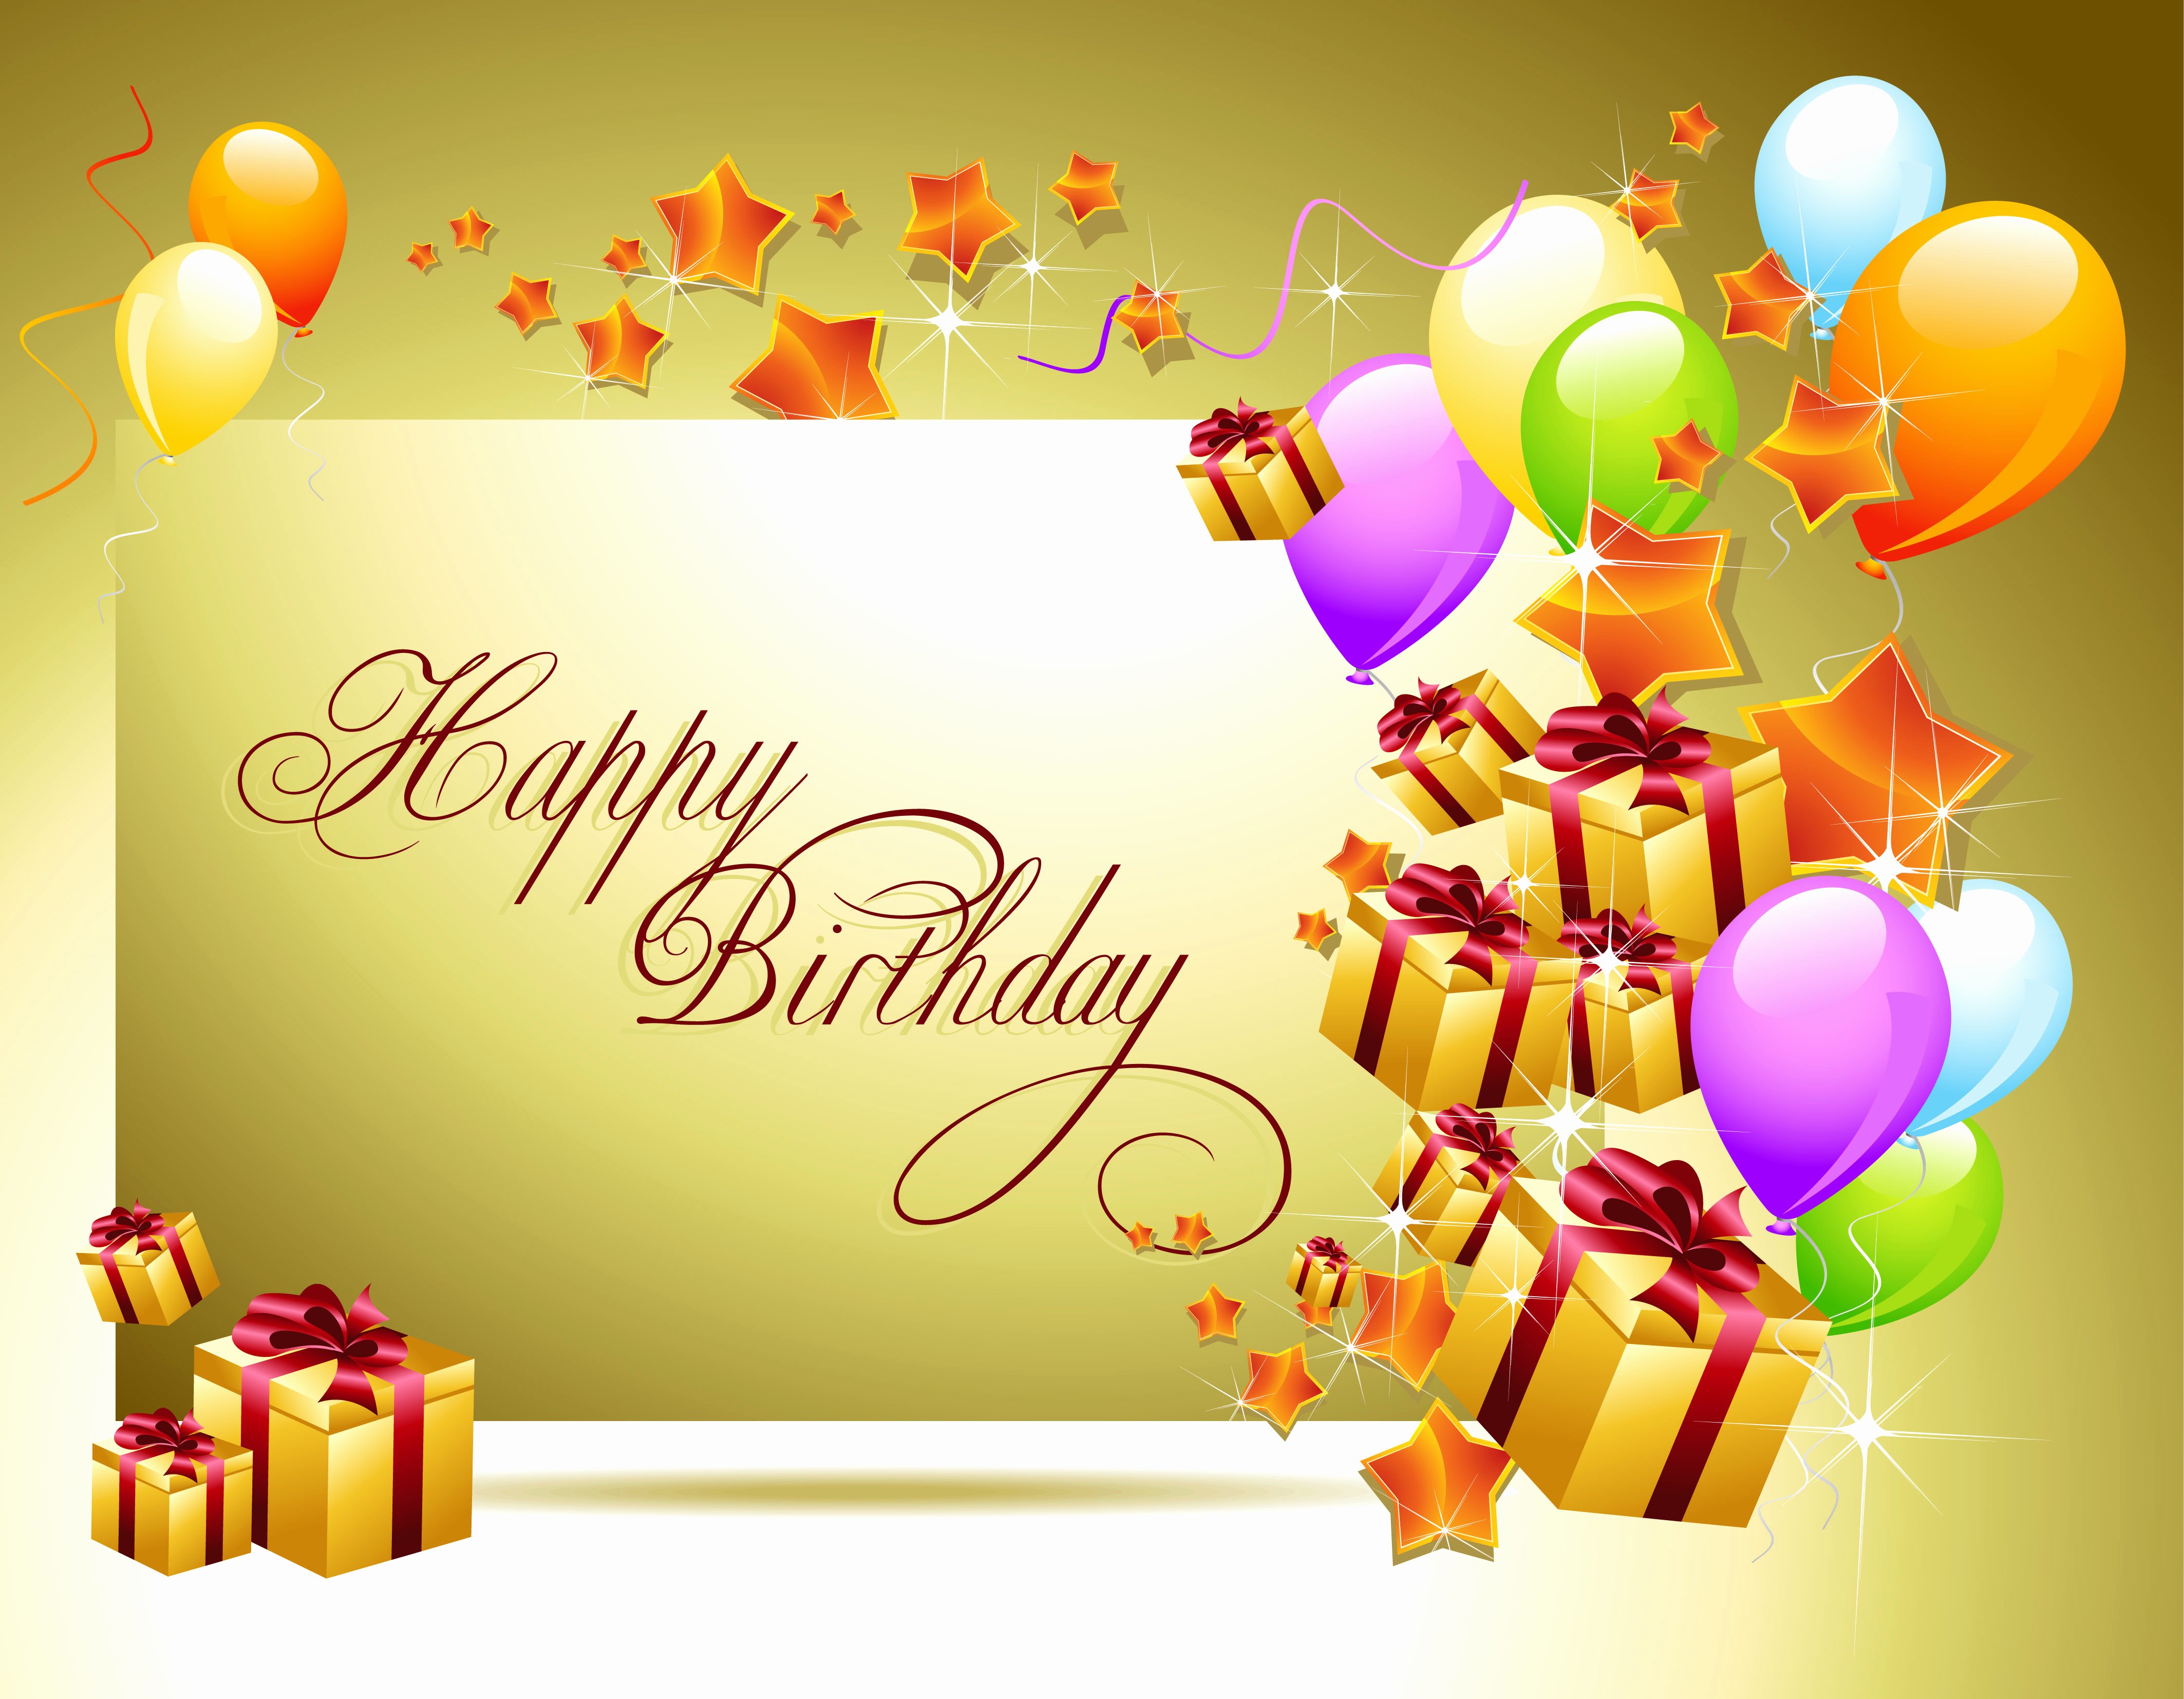 Happy Bday Wallpapers Free Best Of Happy Birthday Cake Whatsapp Dp S